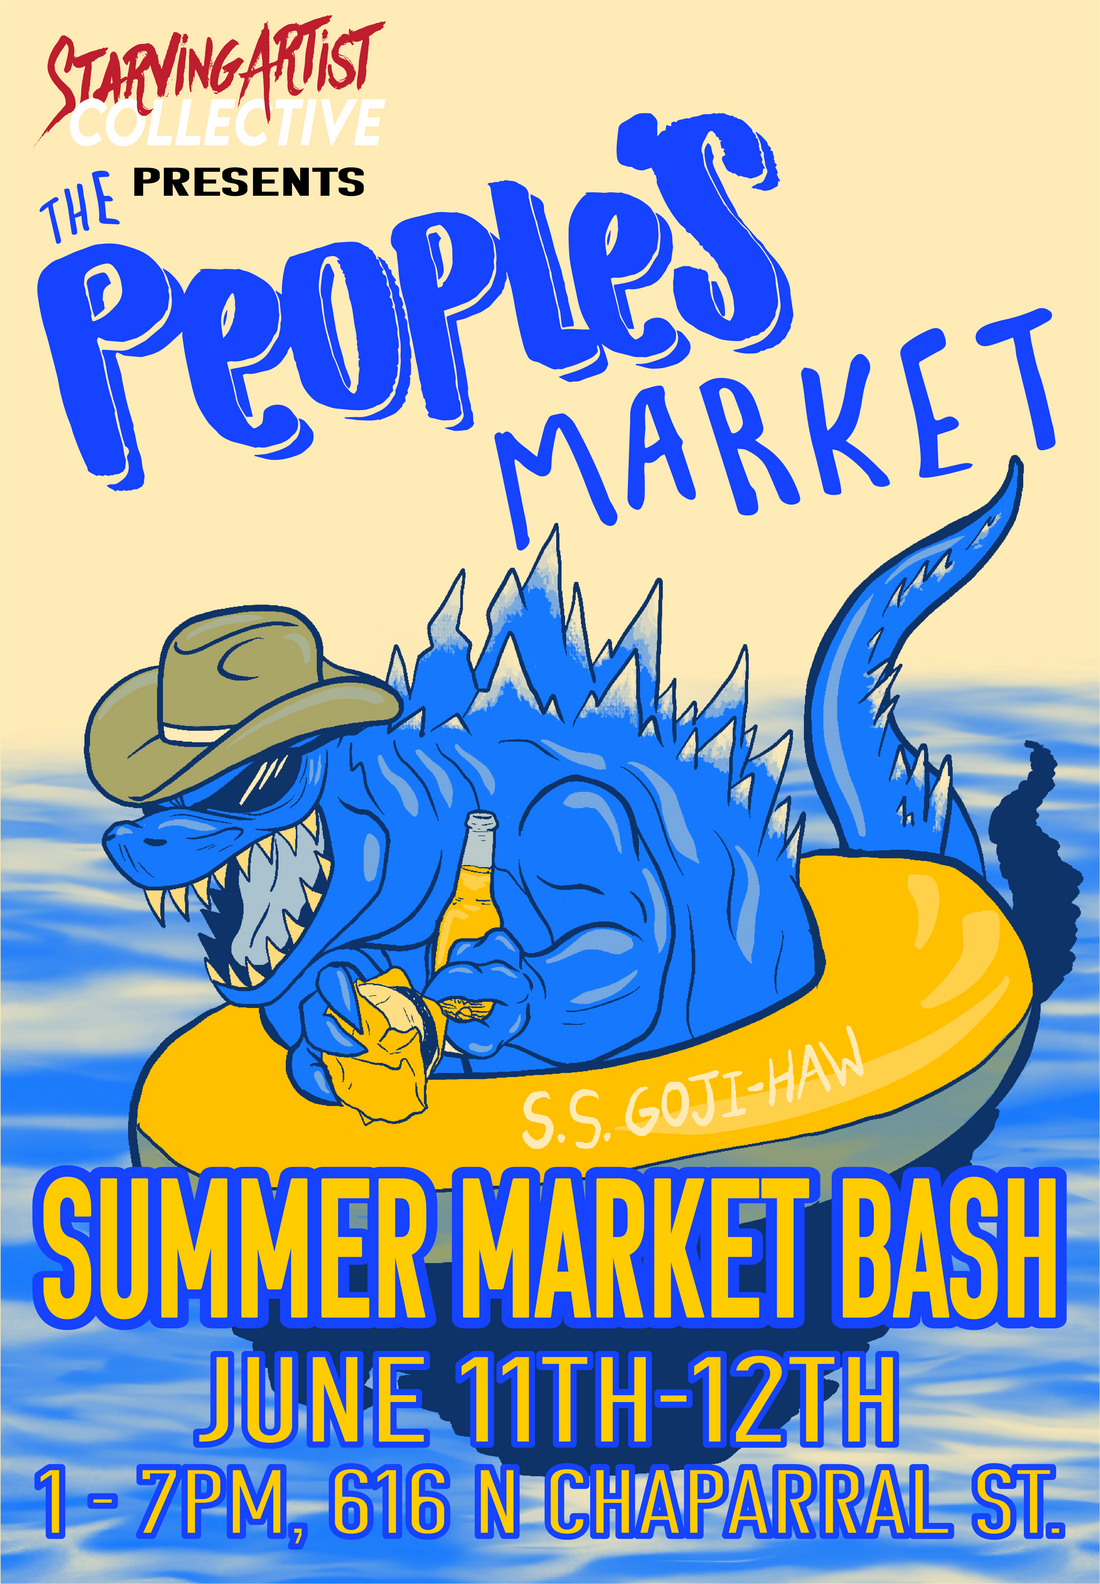 The Peoples Market Summer Bash